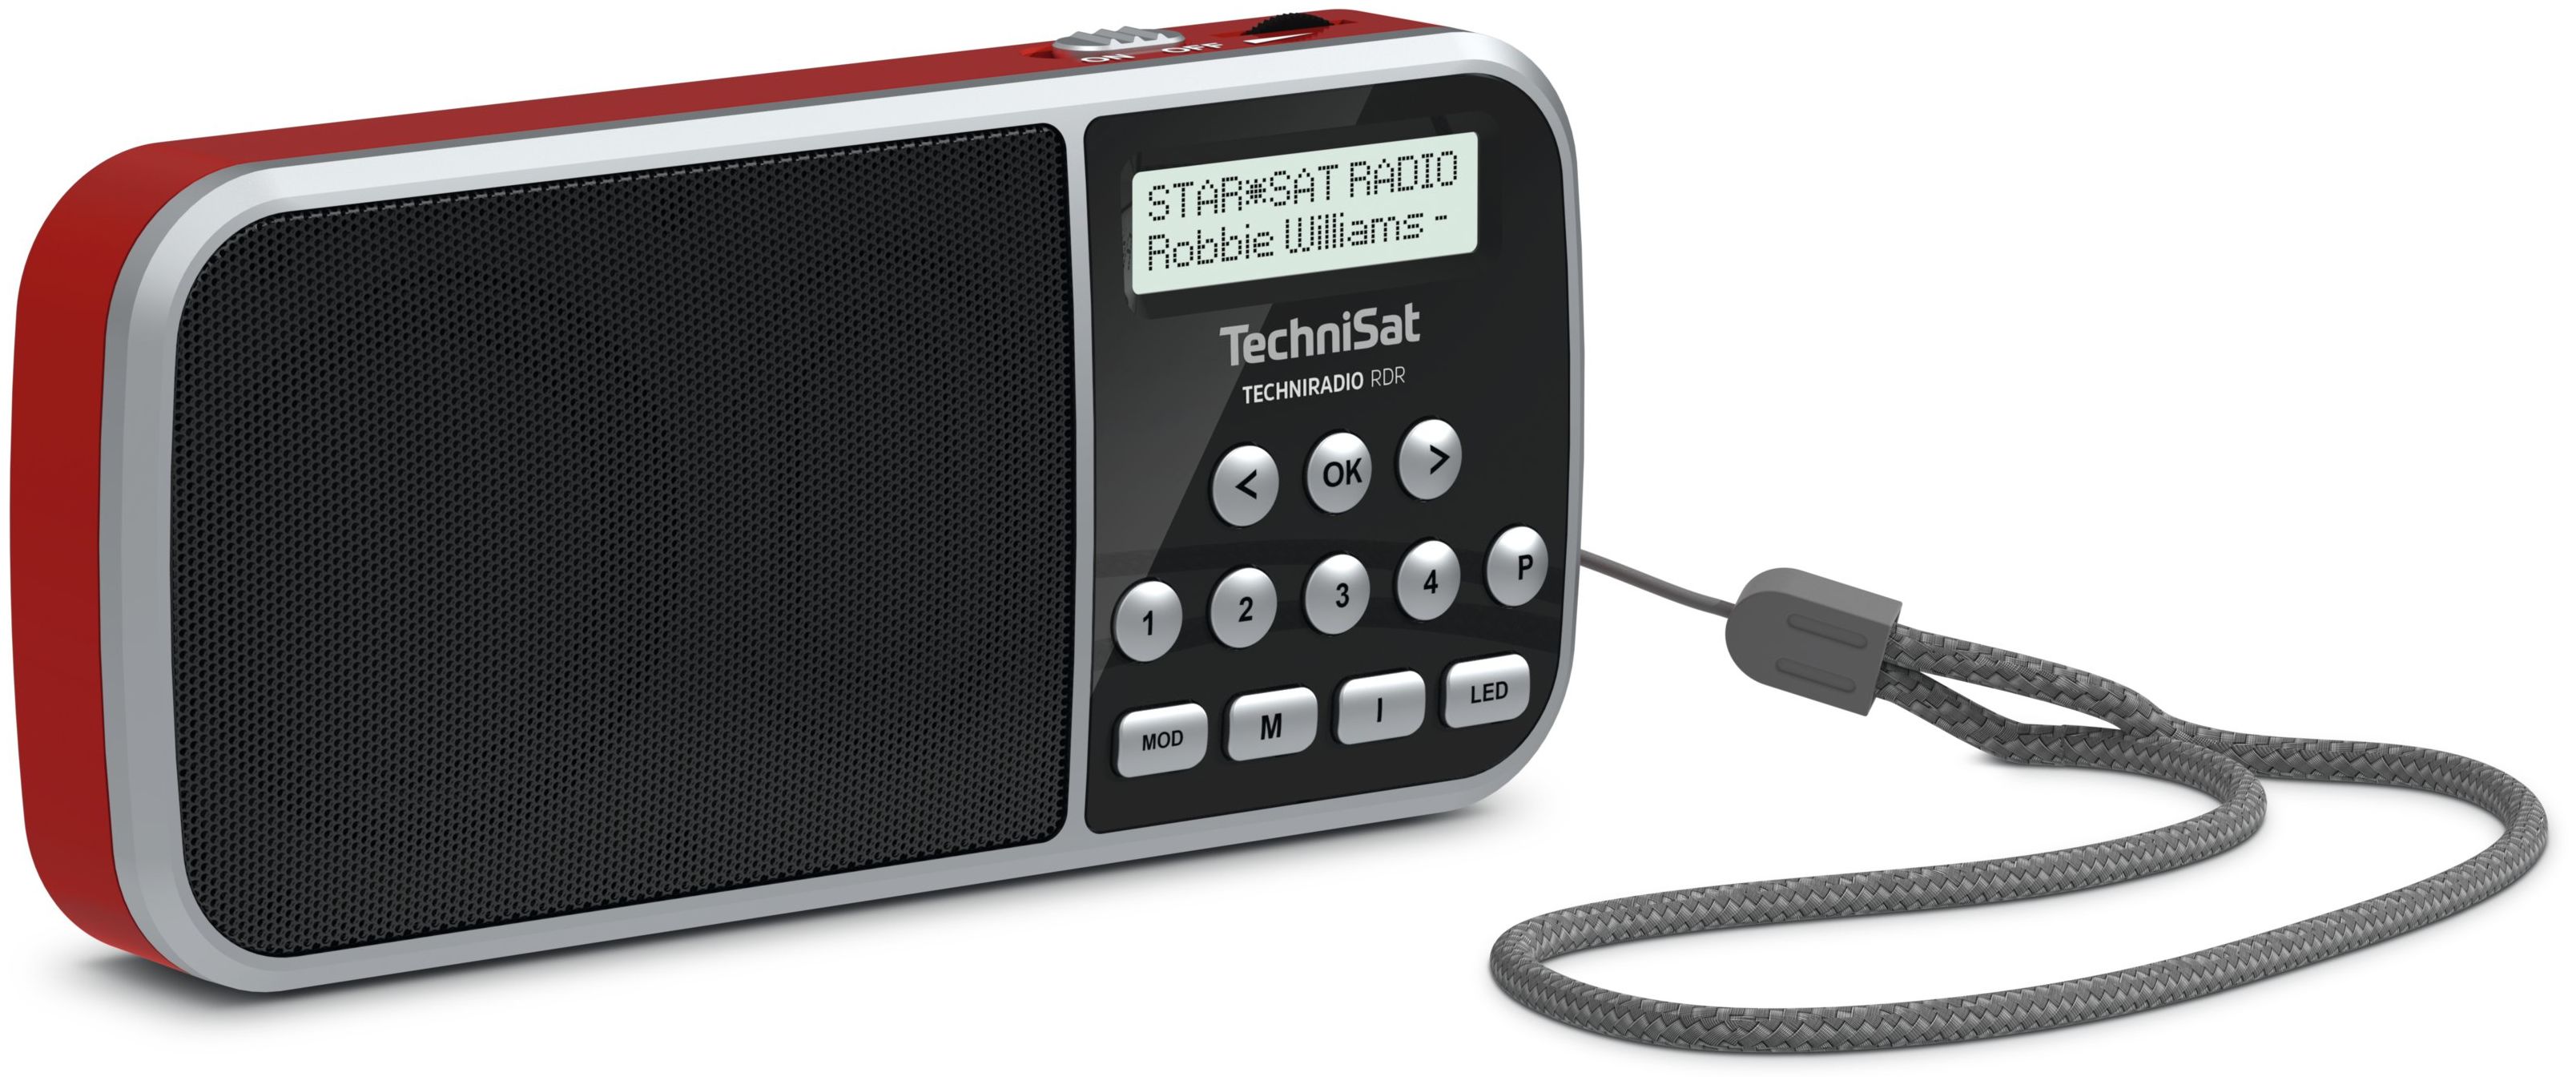 von TechniSat Tragbar Technomarkt (Rot) TechniRadio expert FM DAB+, Radio RDR